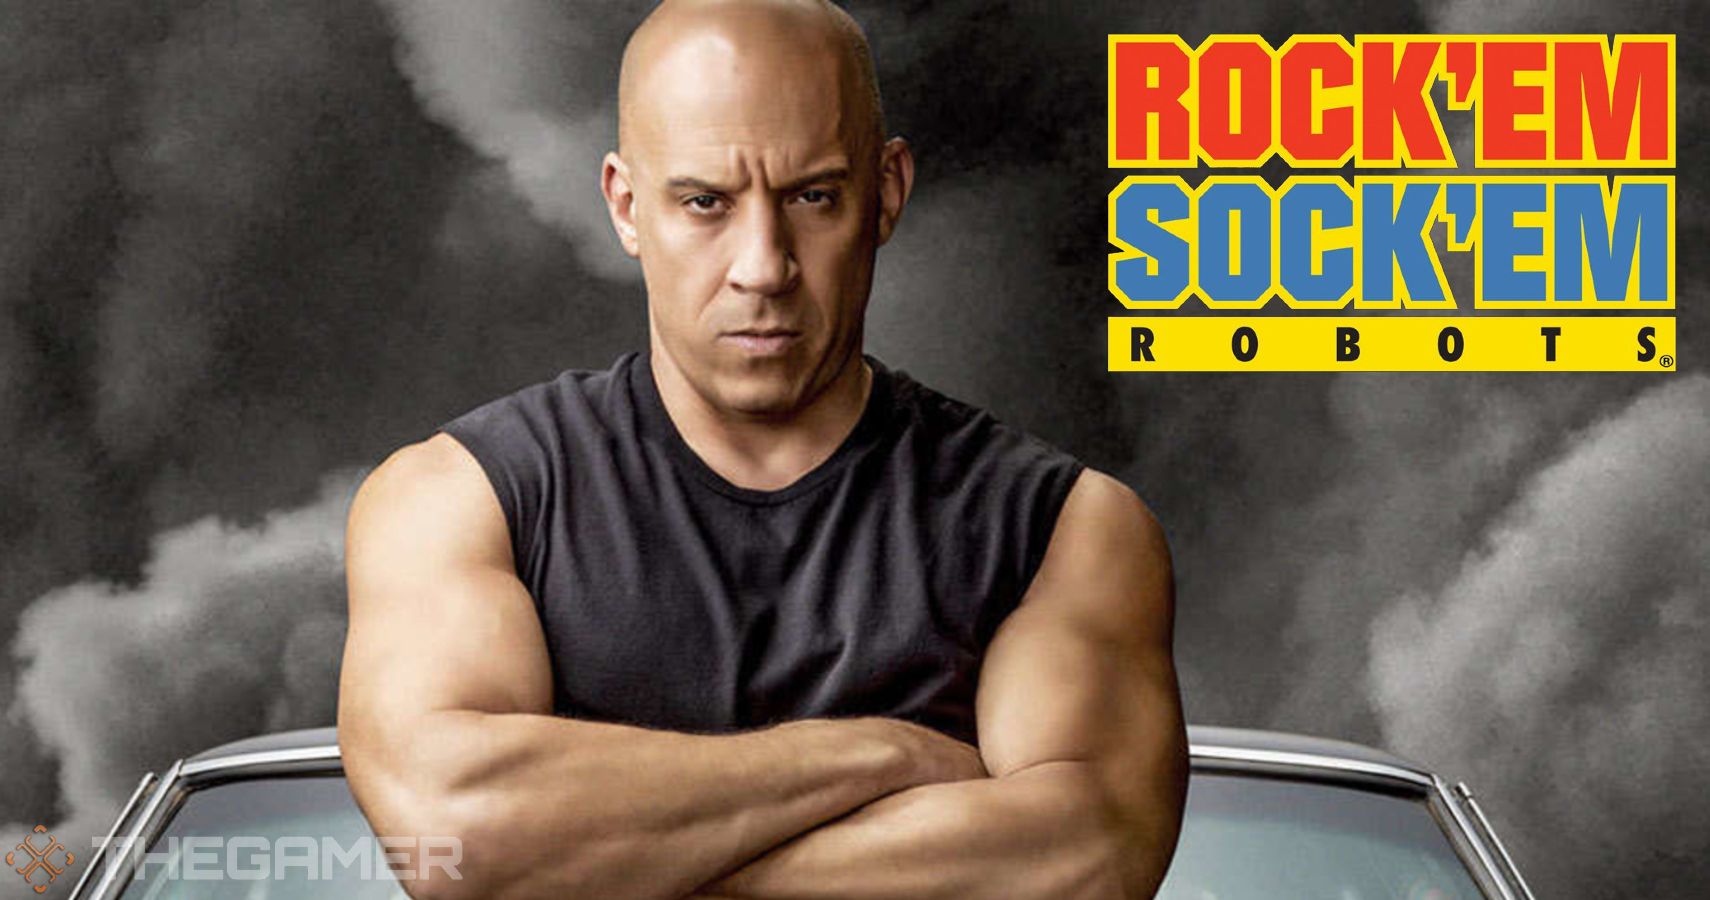 Actor Vin Diesel for the announcement of the Rock'em Sock'em Robots movie